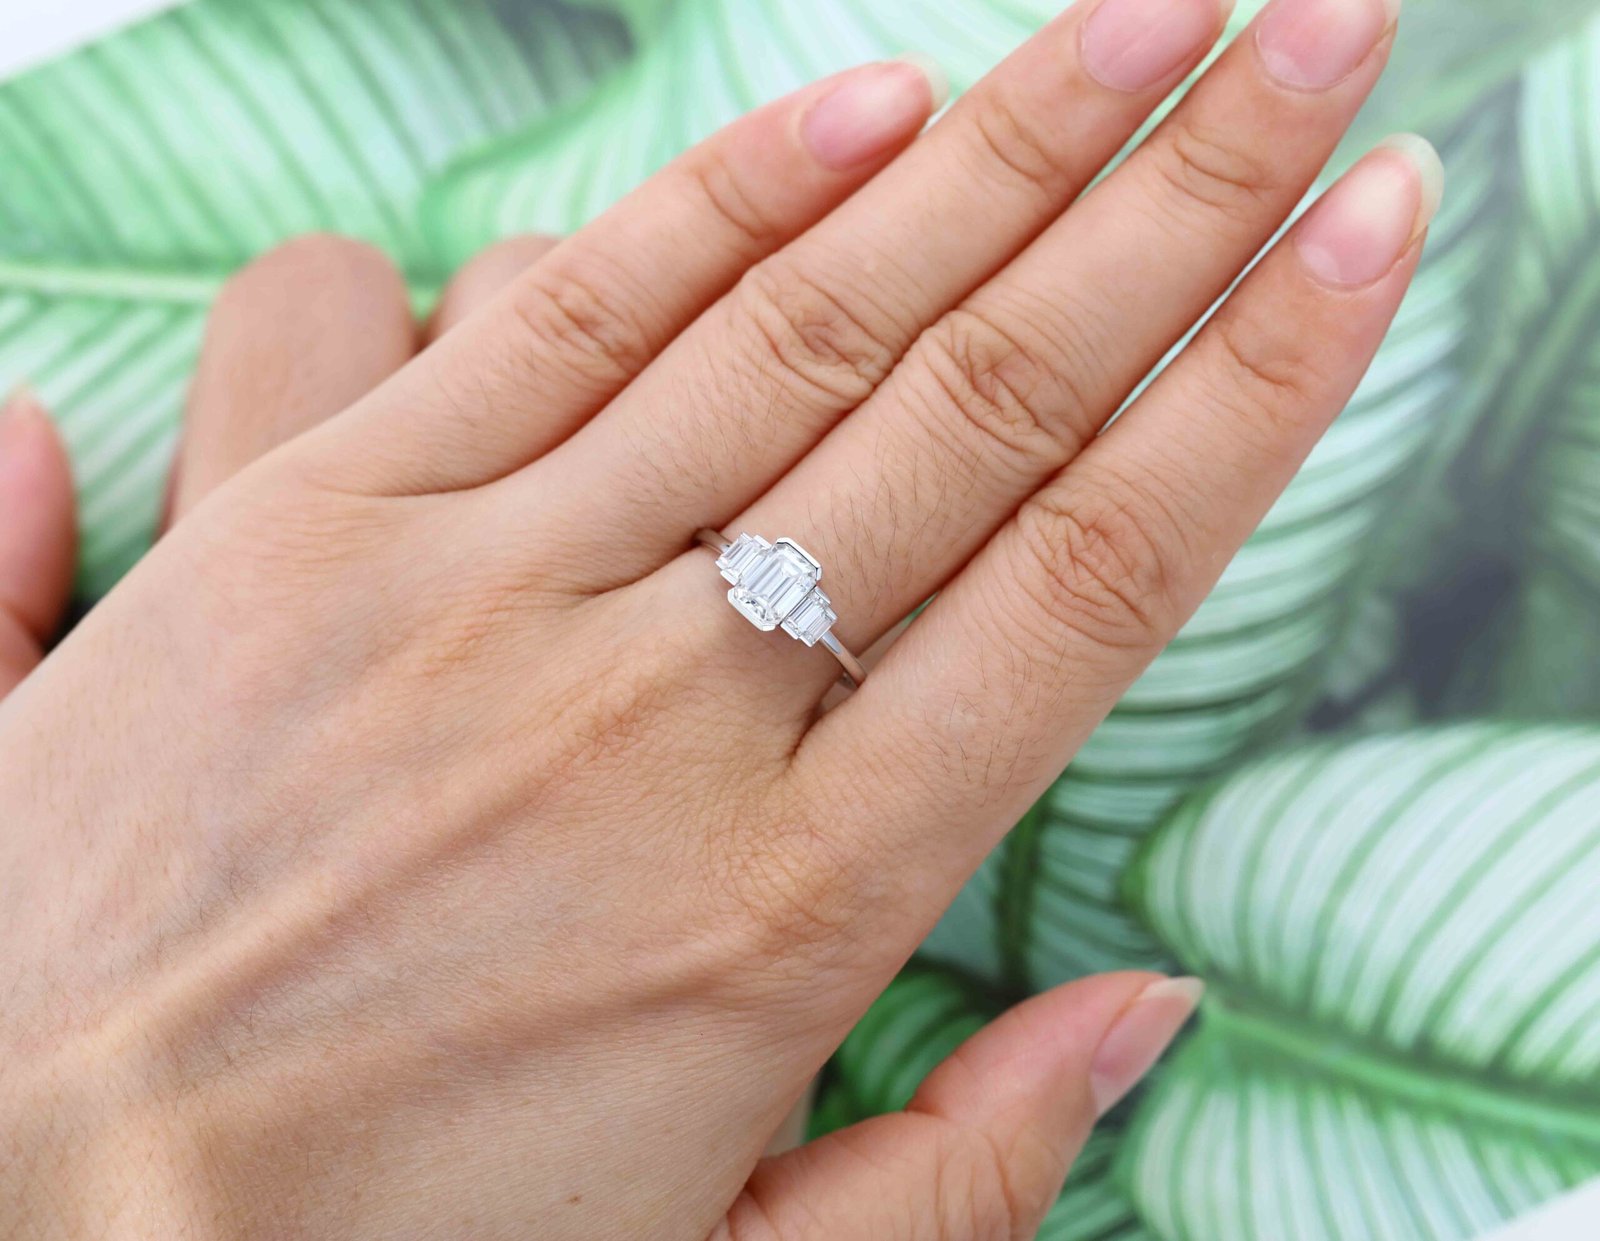 Emerald cut wedding set-Bridal set rings white gold-2 carat wedding  set-Halo diamond engagement wedding sets-Promise ring-FREE SHIPPING